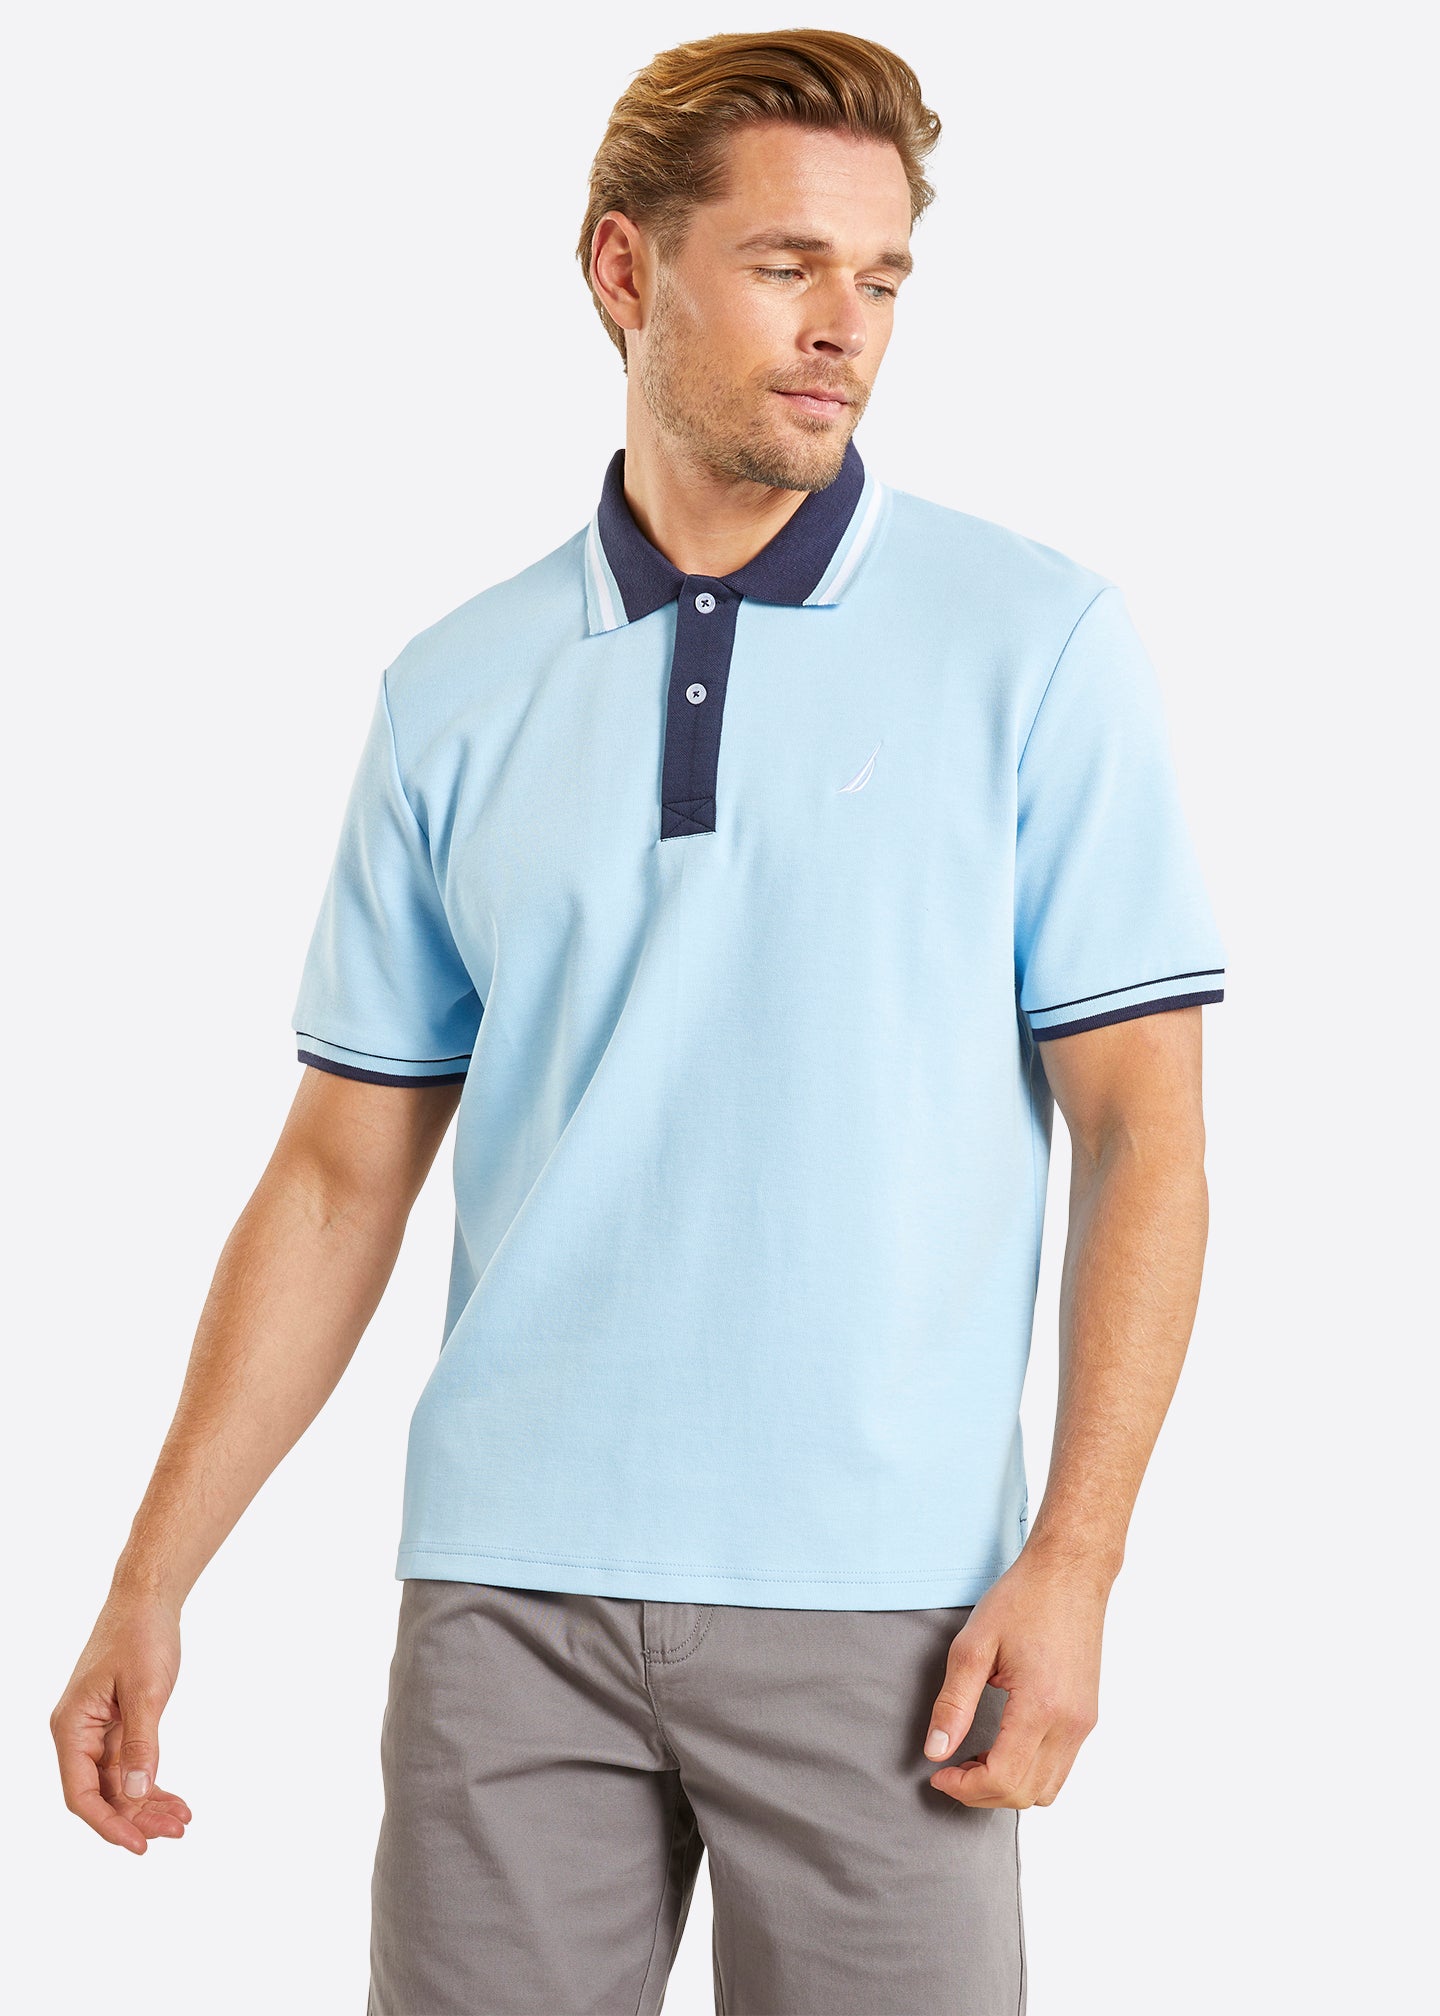 Nautica Langley Polo Shirt - Sky Blue - Front